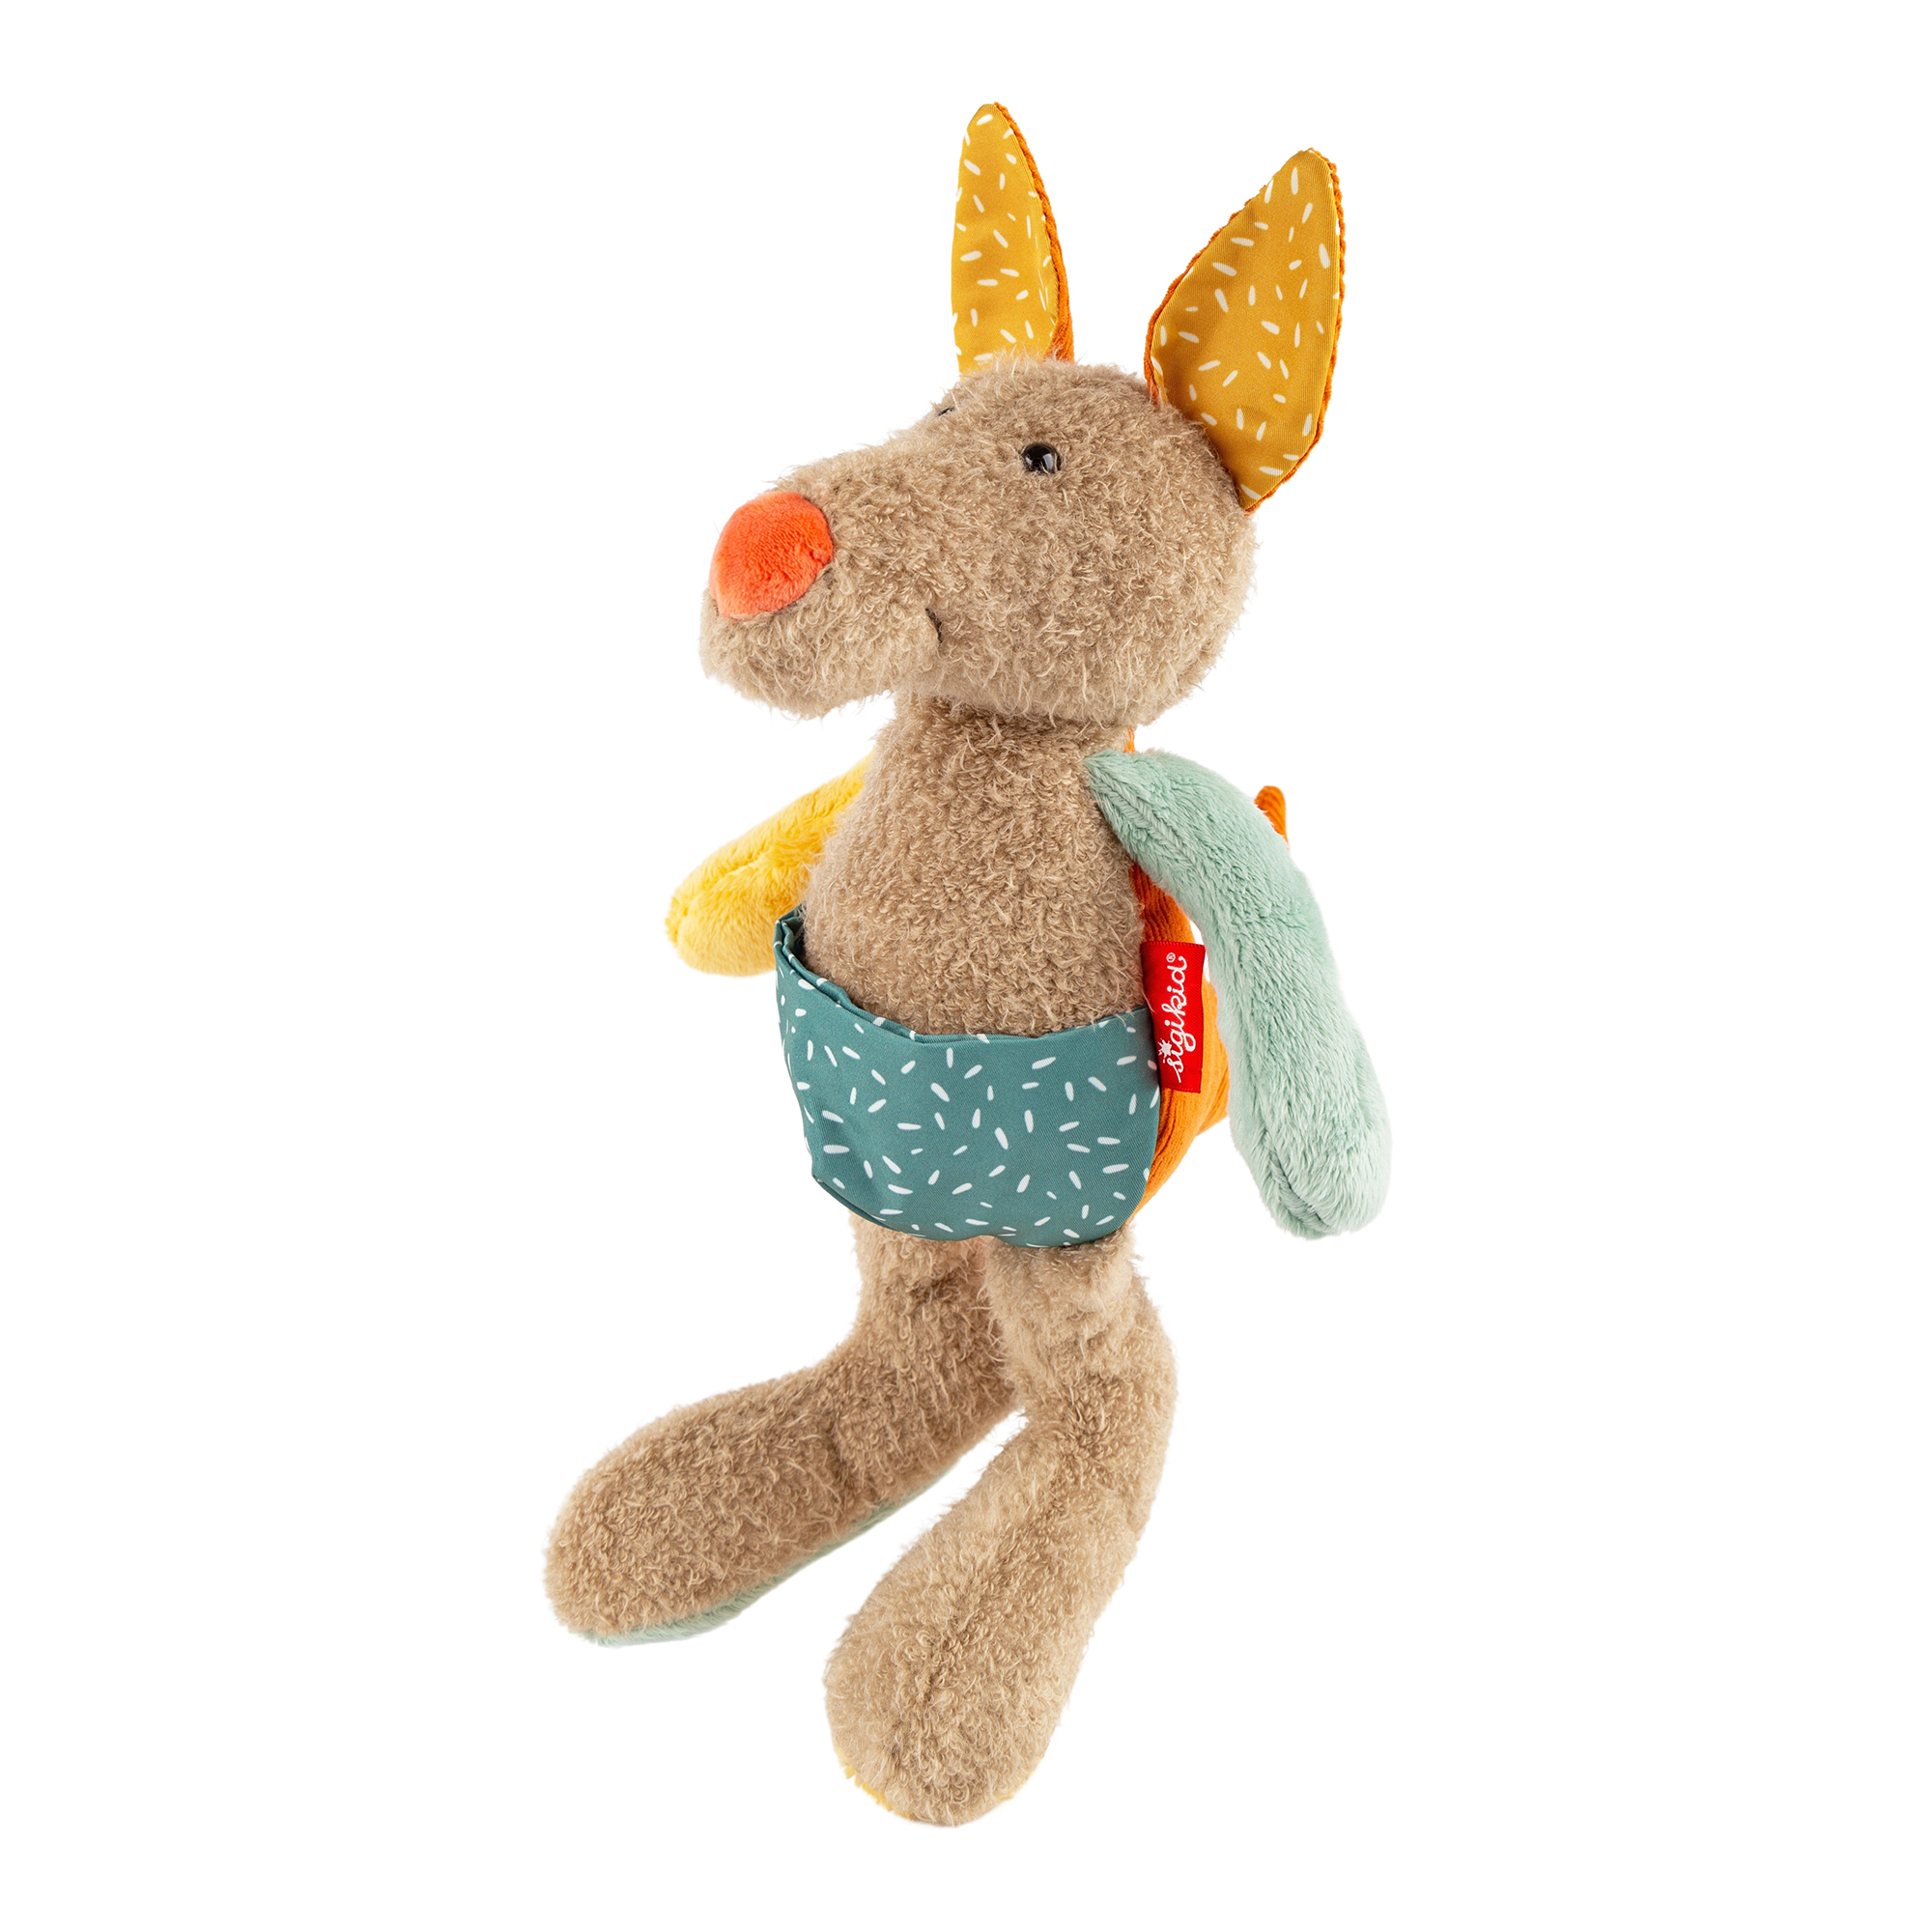 Patchwork soft toy kangaroo